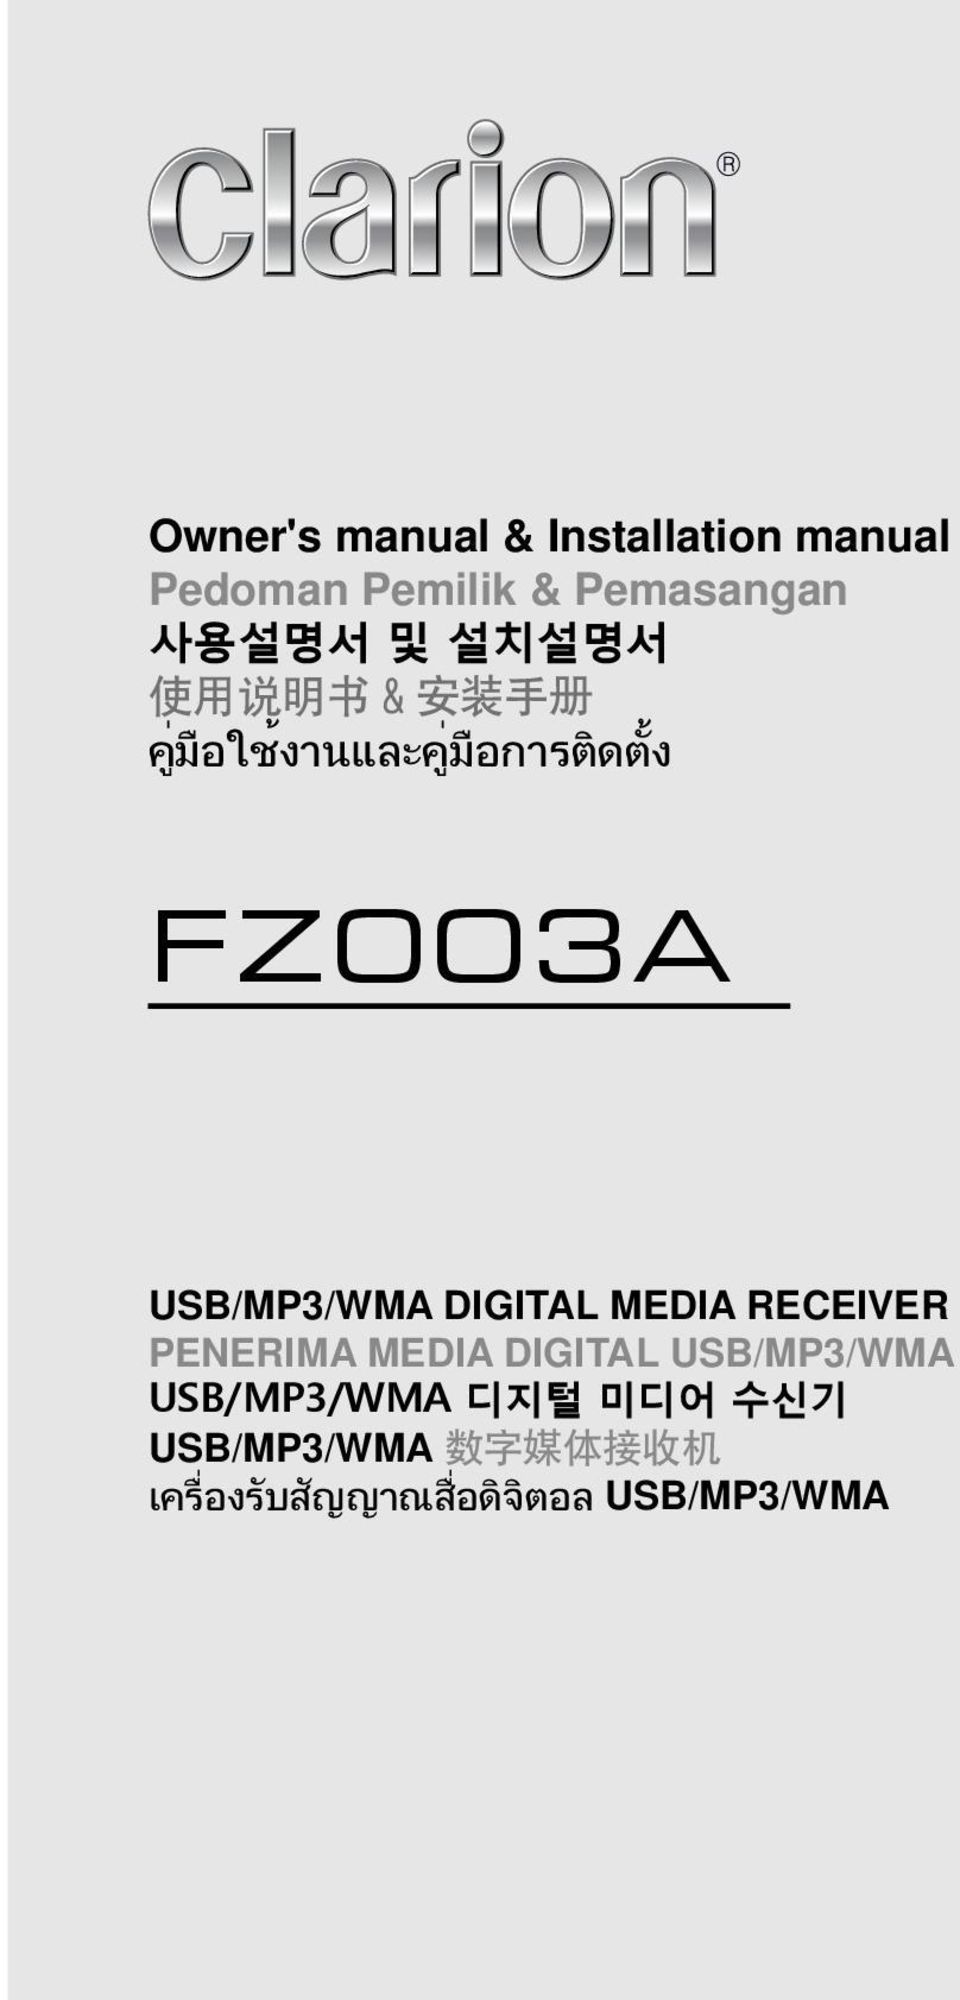 DIGITAL MEDIA RECEIVER PENERIMA MEDIA DIGITAL USB/MP3/WMA USB/MP3/WMA